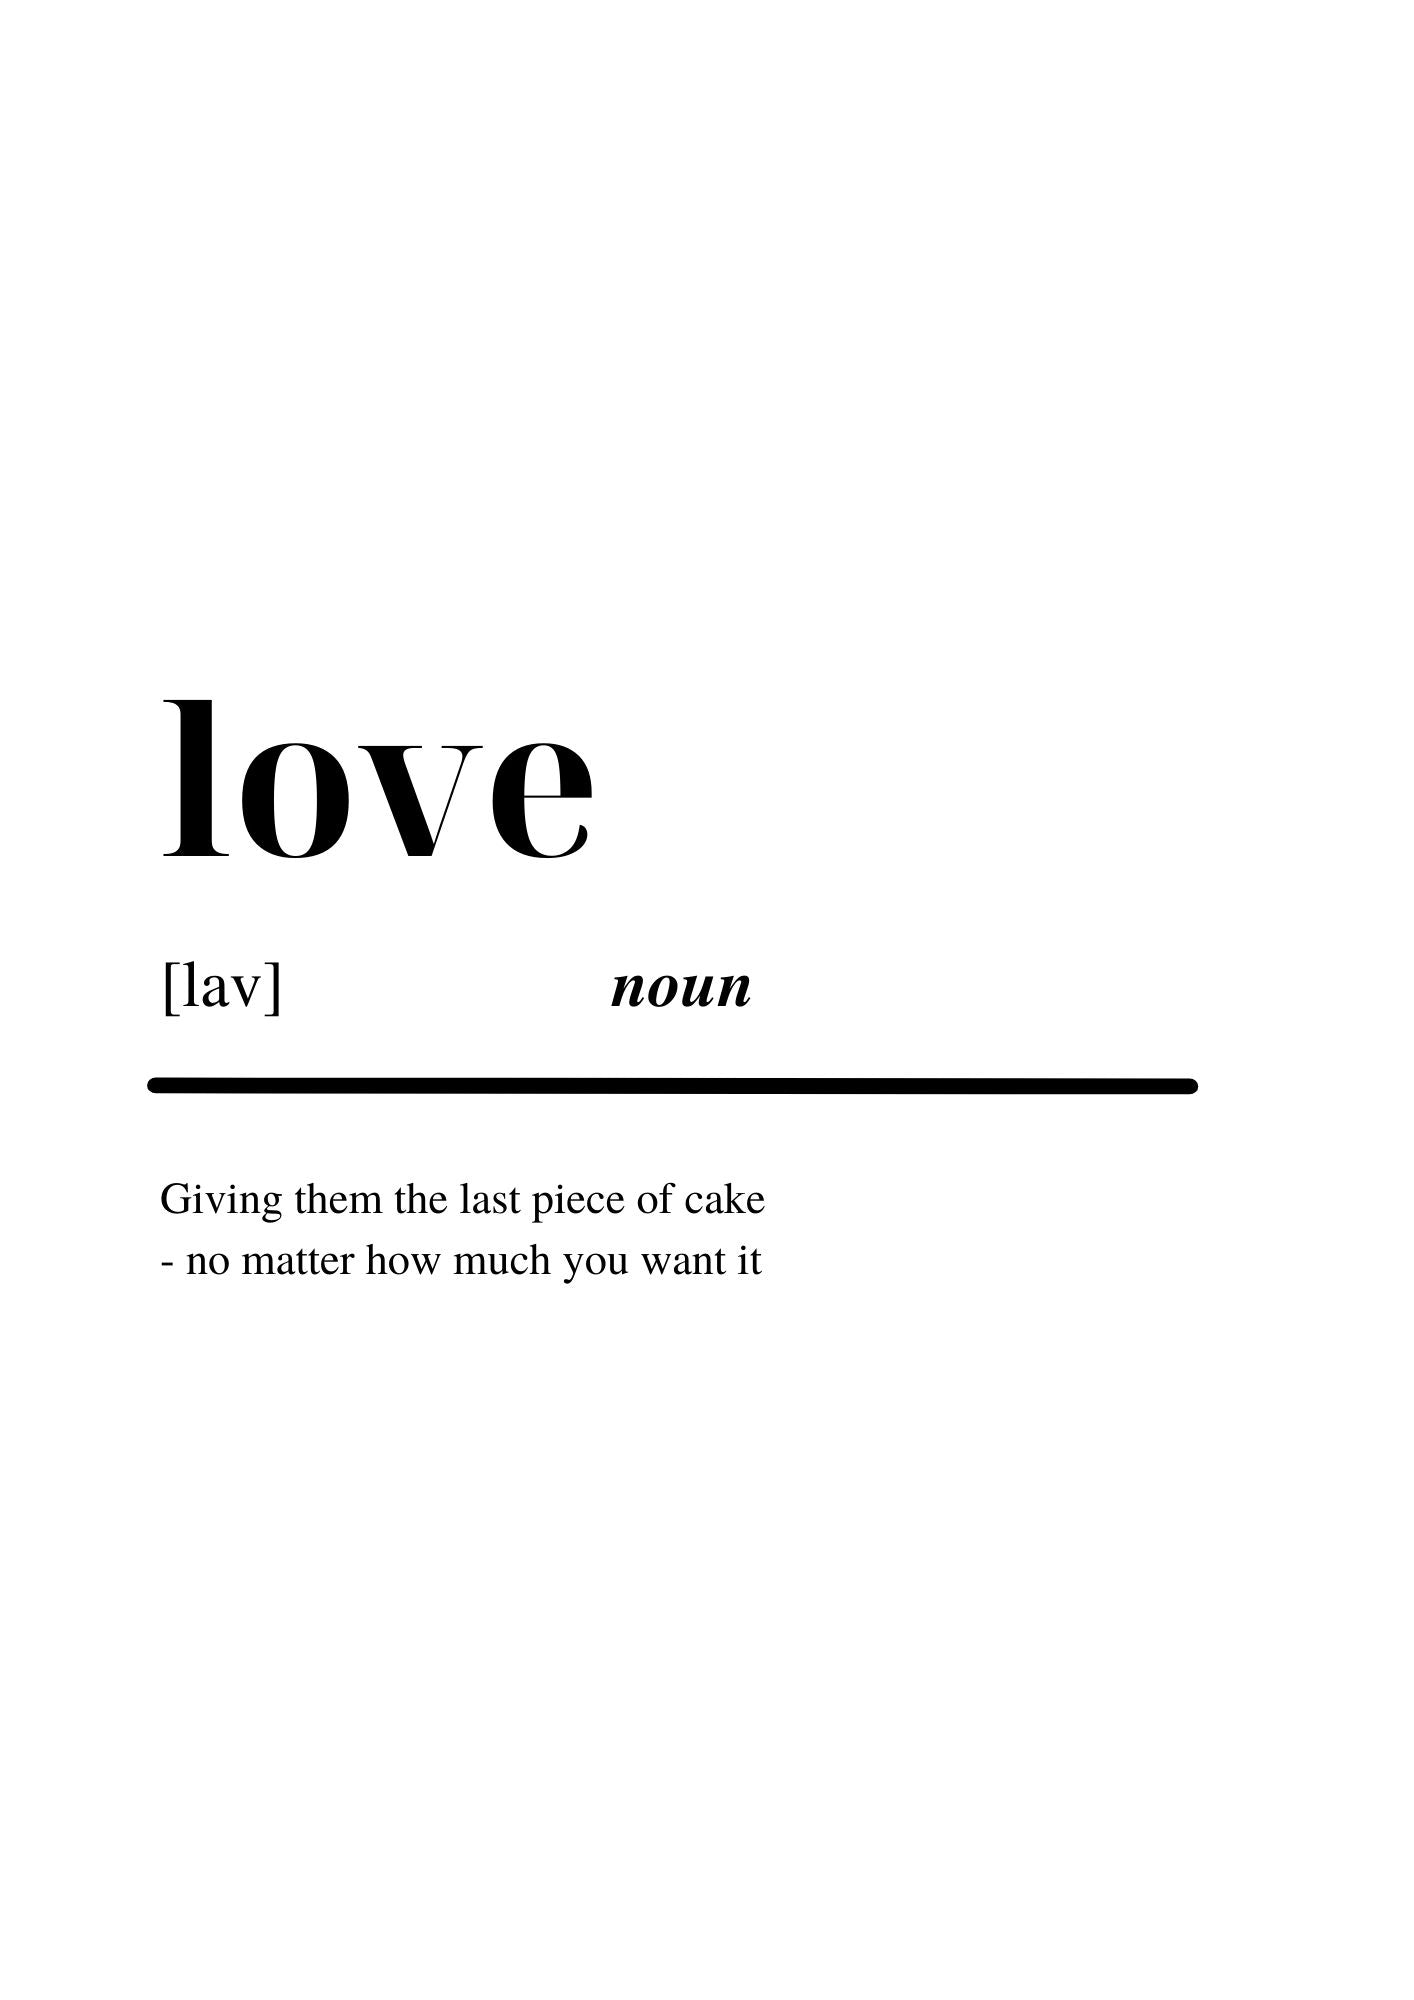 Love noun poster